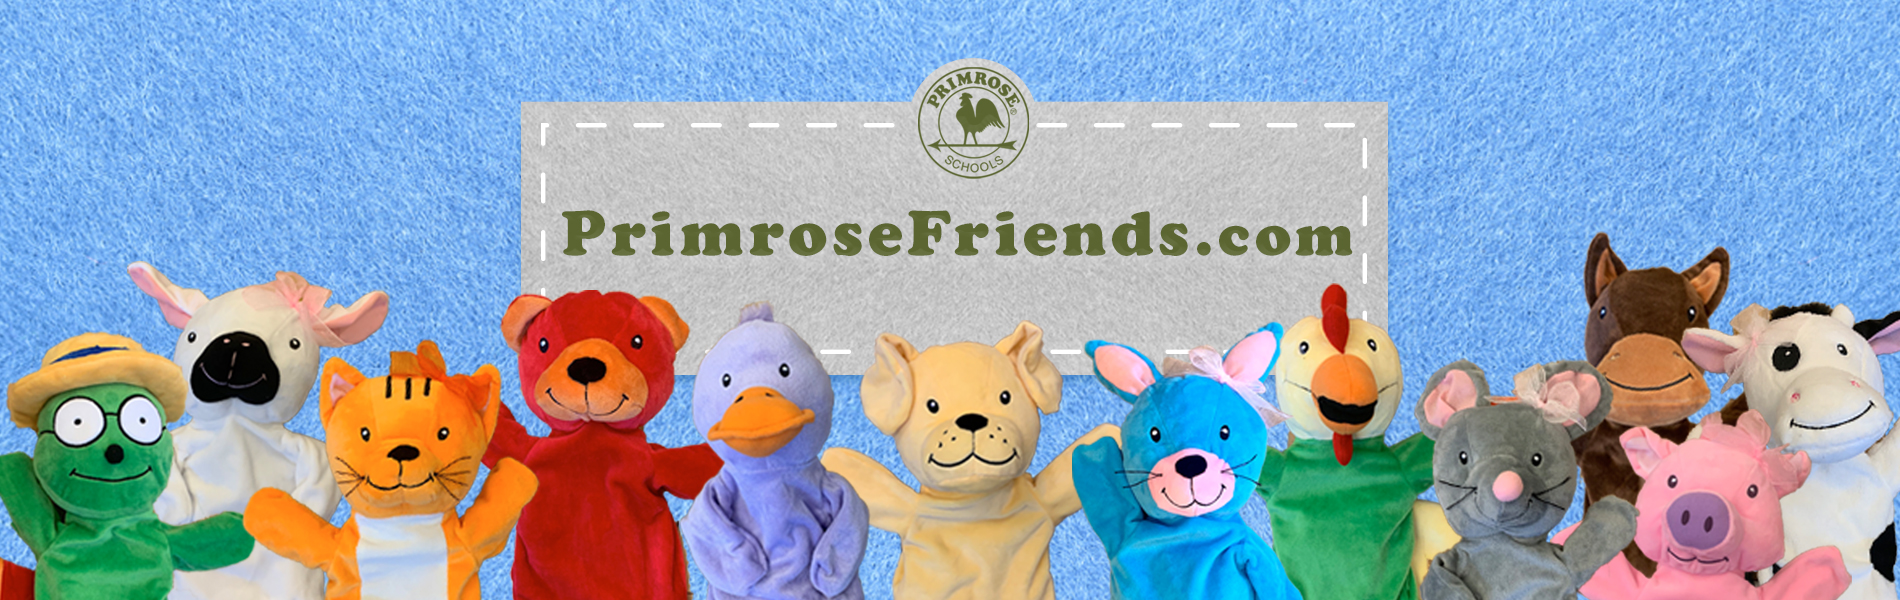 PrimroseFriends.com banner featuring animal puppets